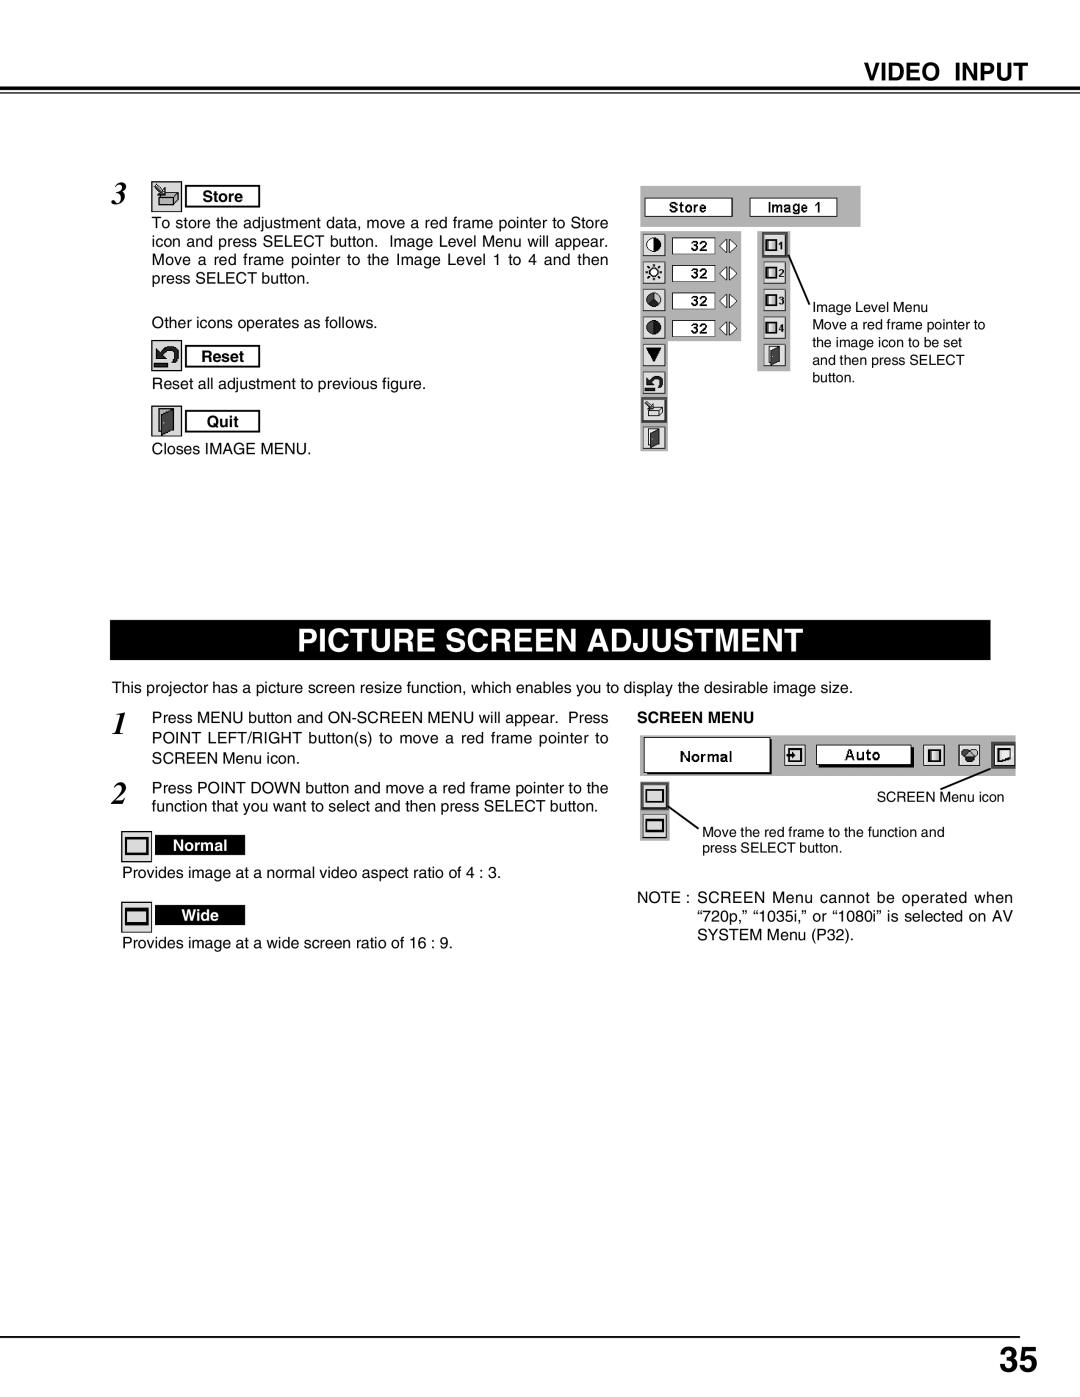 Sanyo PLC-XT10A owner manual Picture Screen Adjustment, Store, Reset, Quit, Screen Menu 